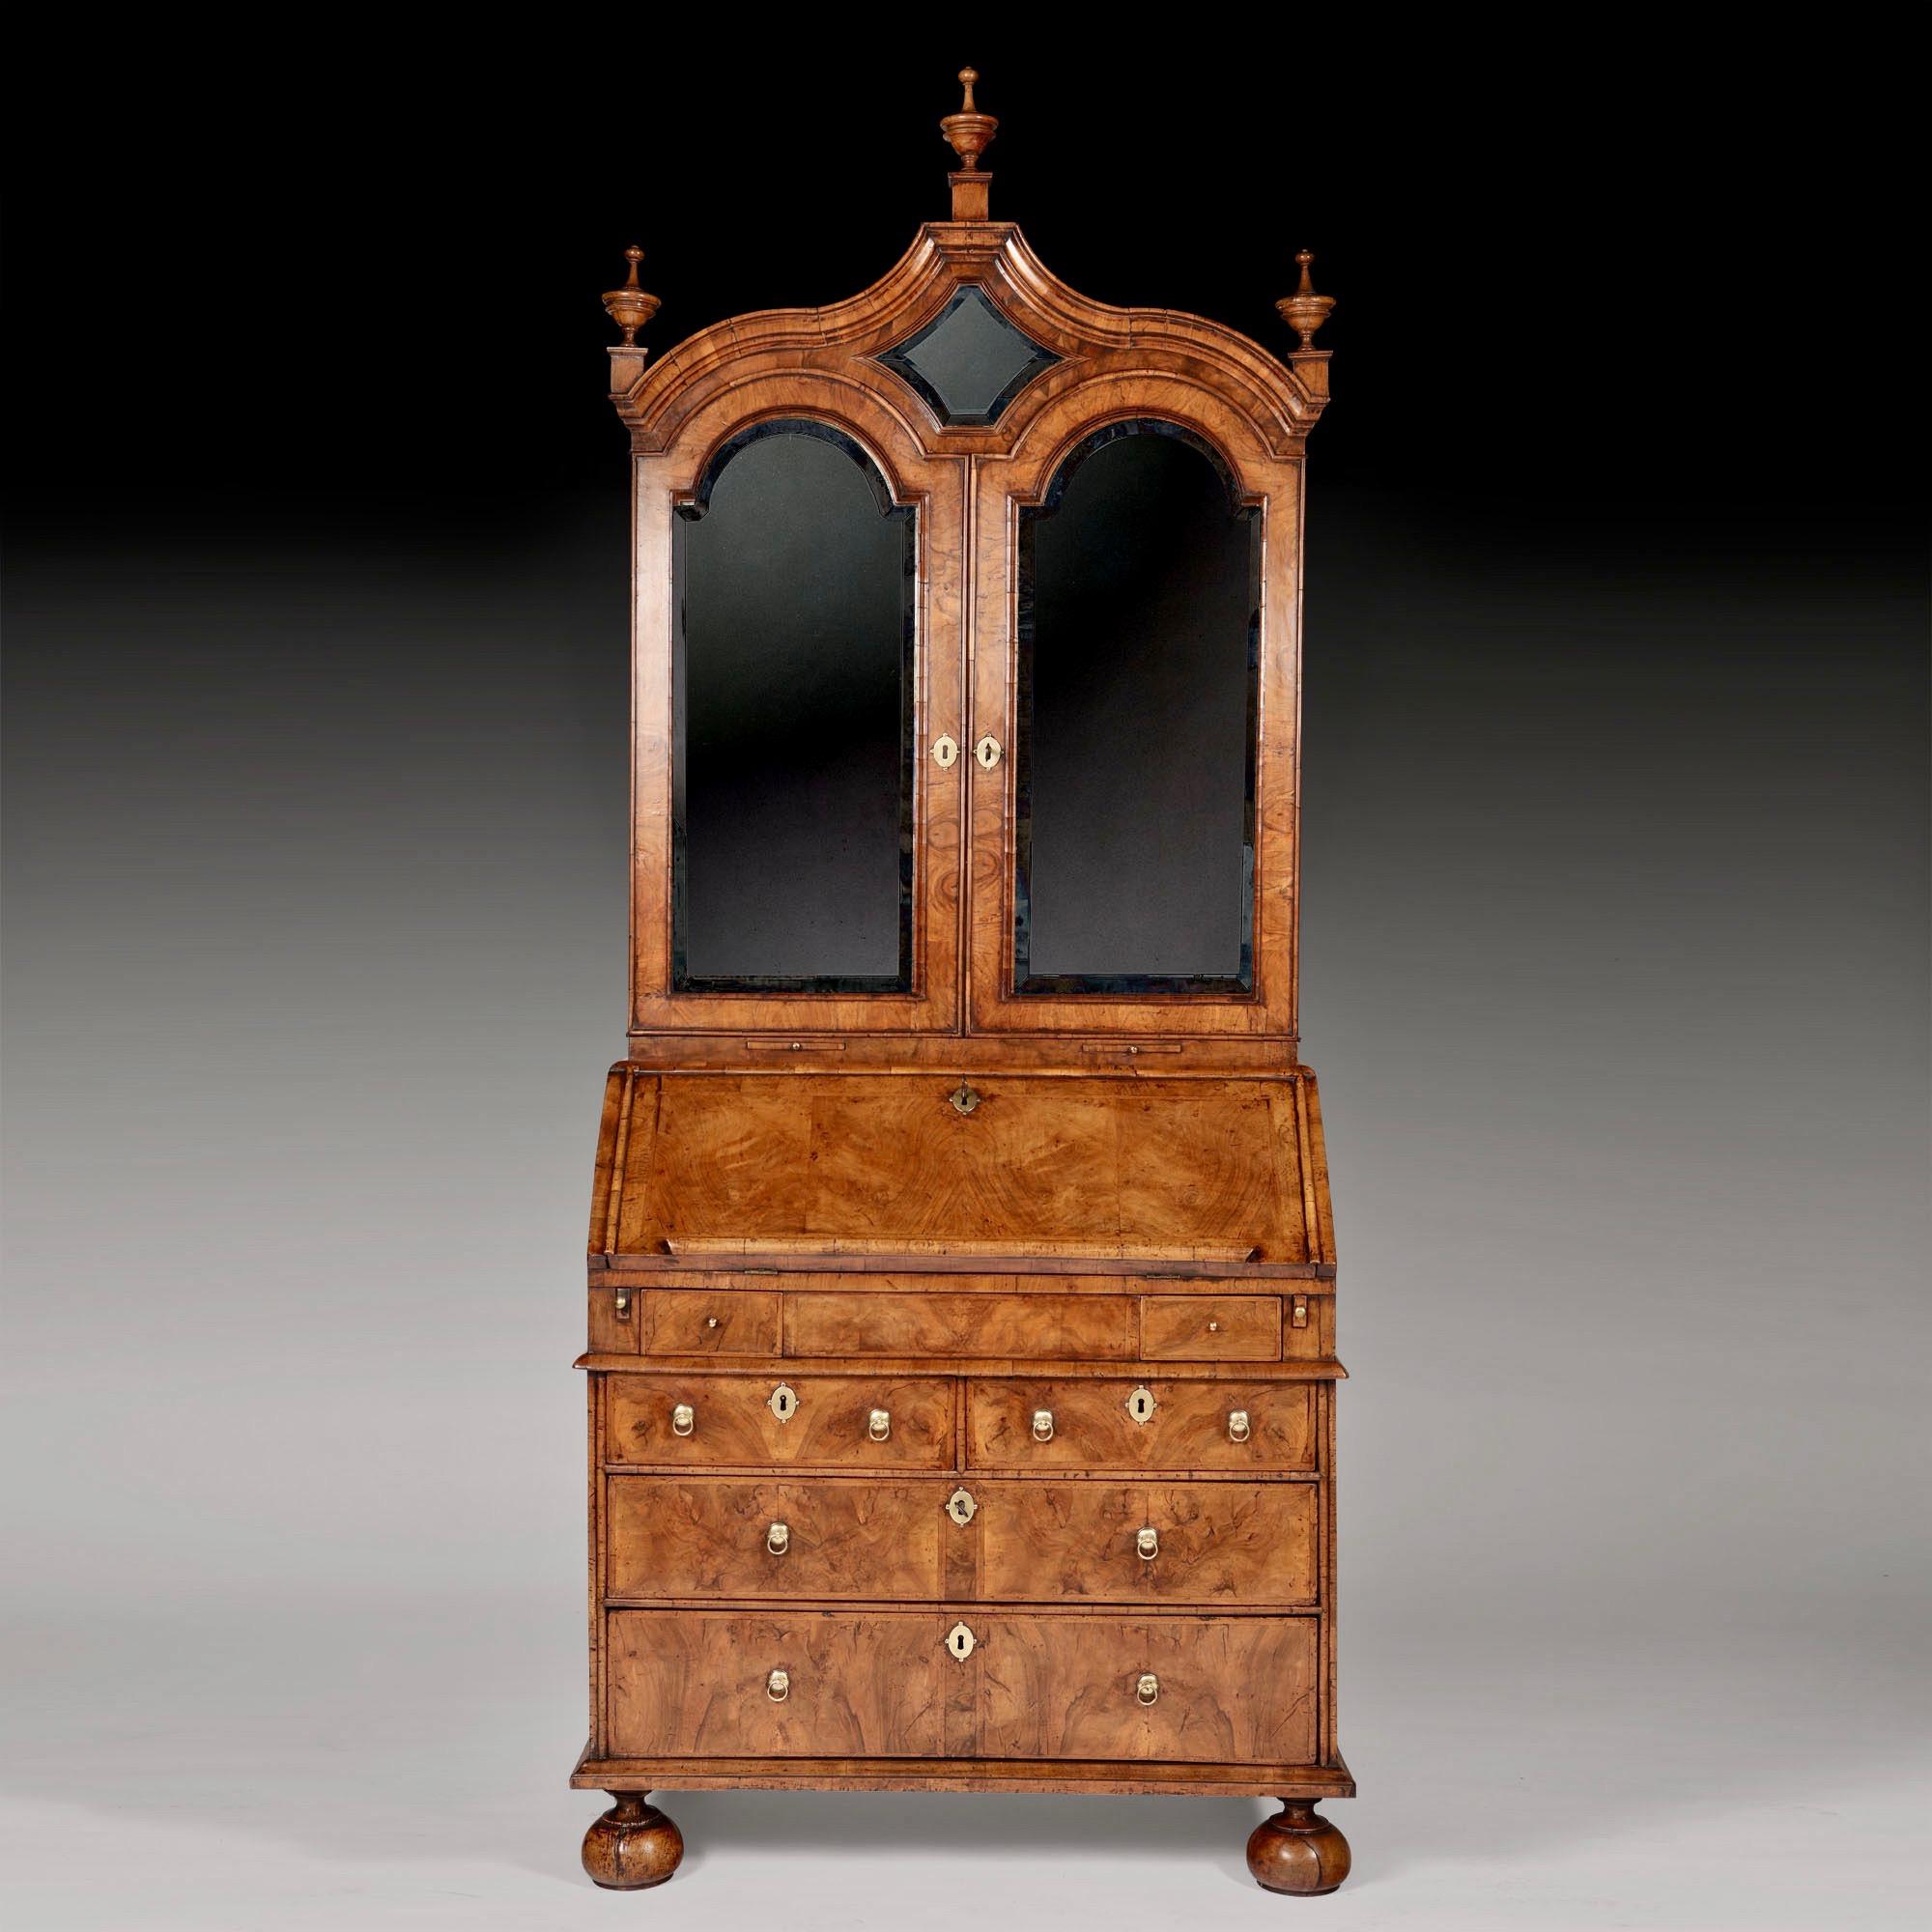 British Early 18th Century George I Figured Walnut Bureau Bookcase For Sale